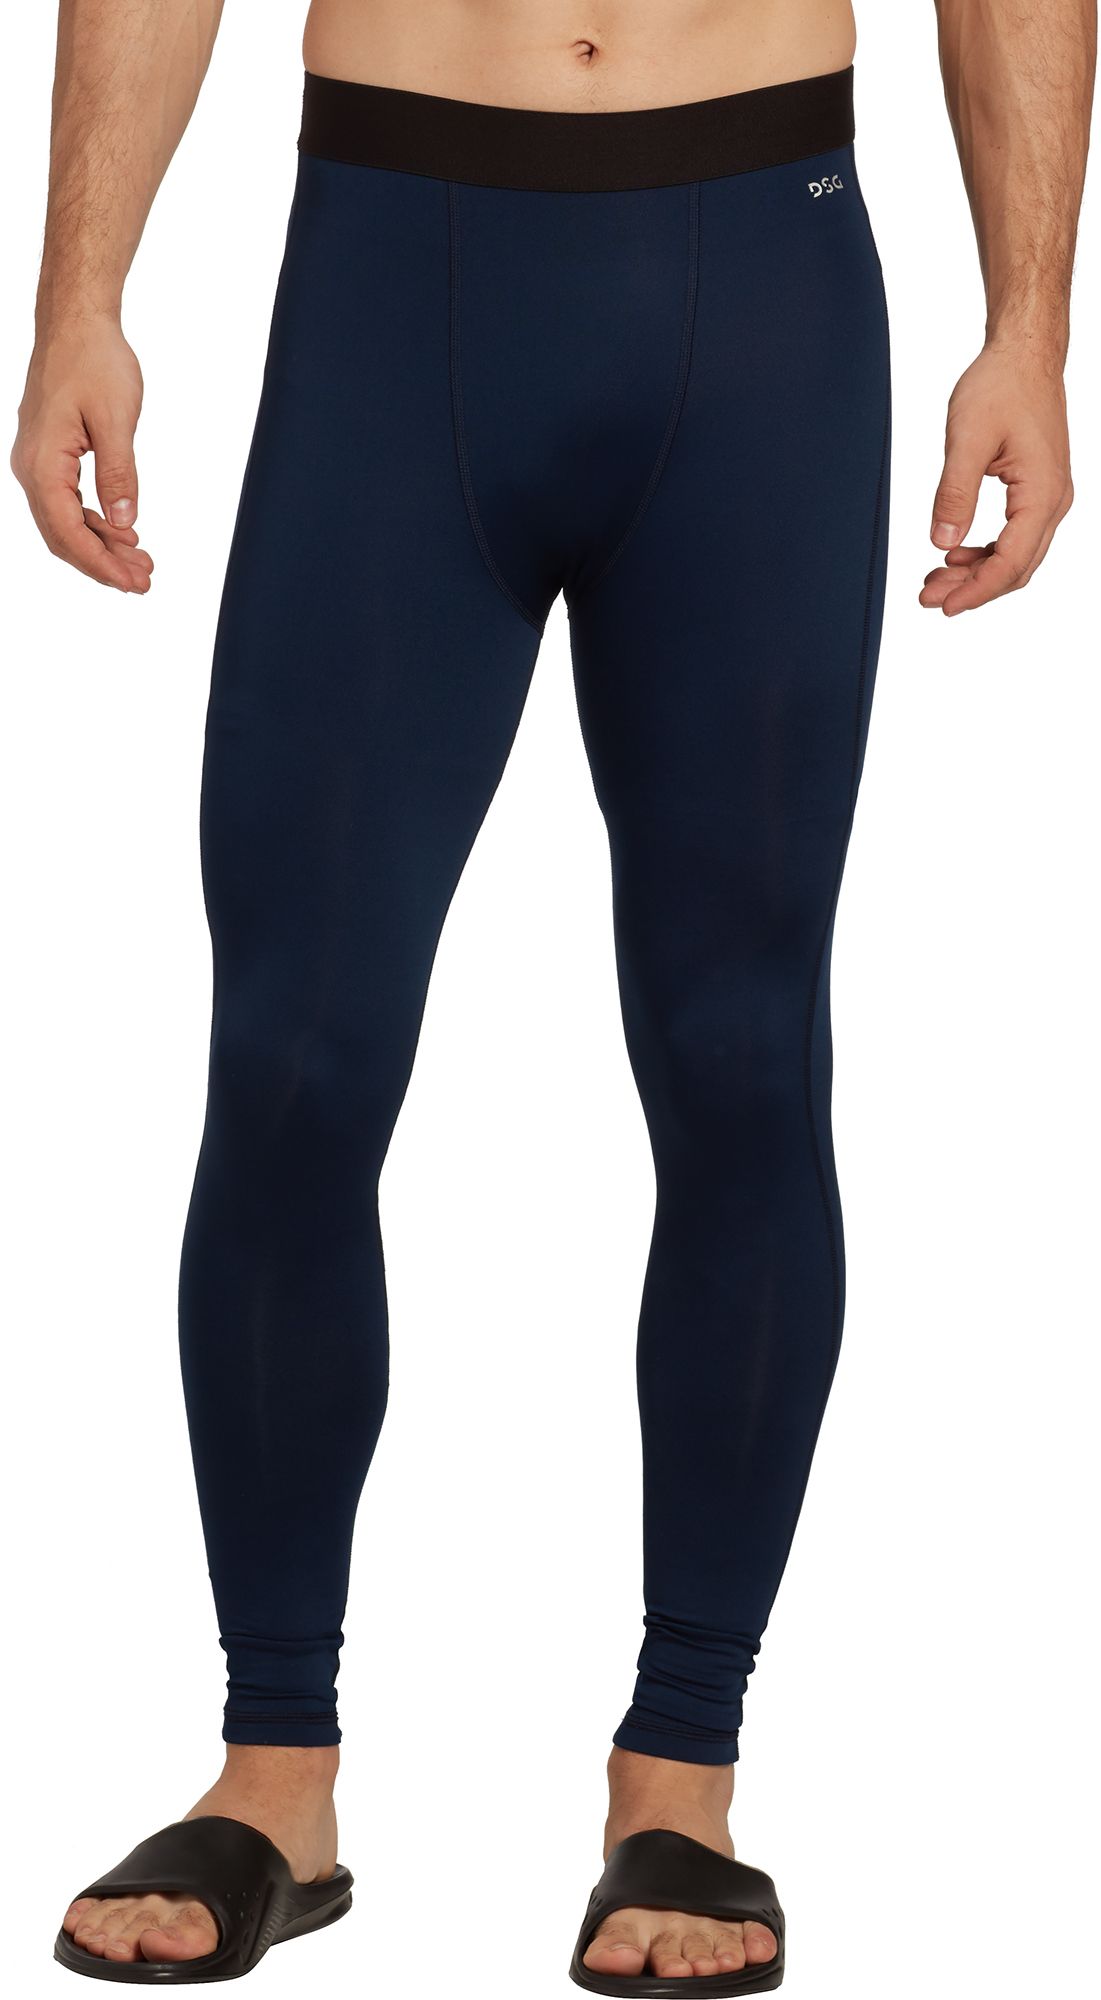 navy blue nike compression pants